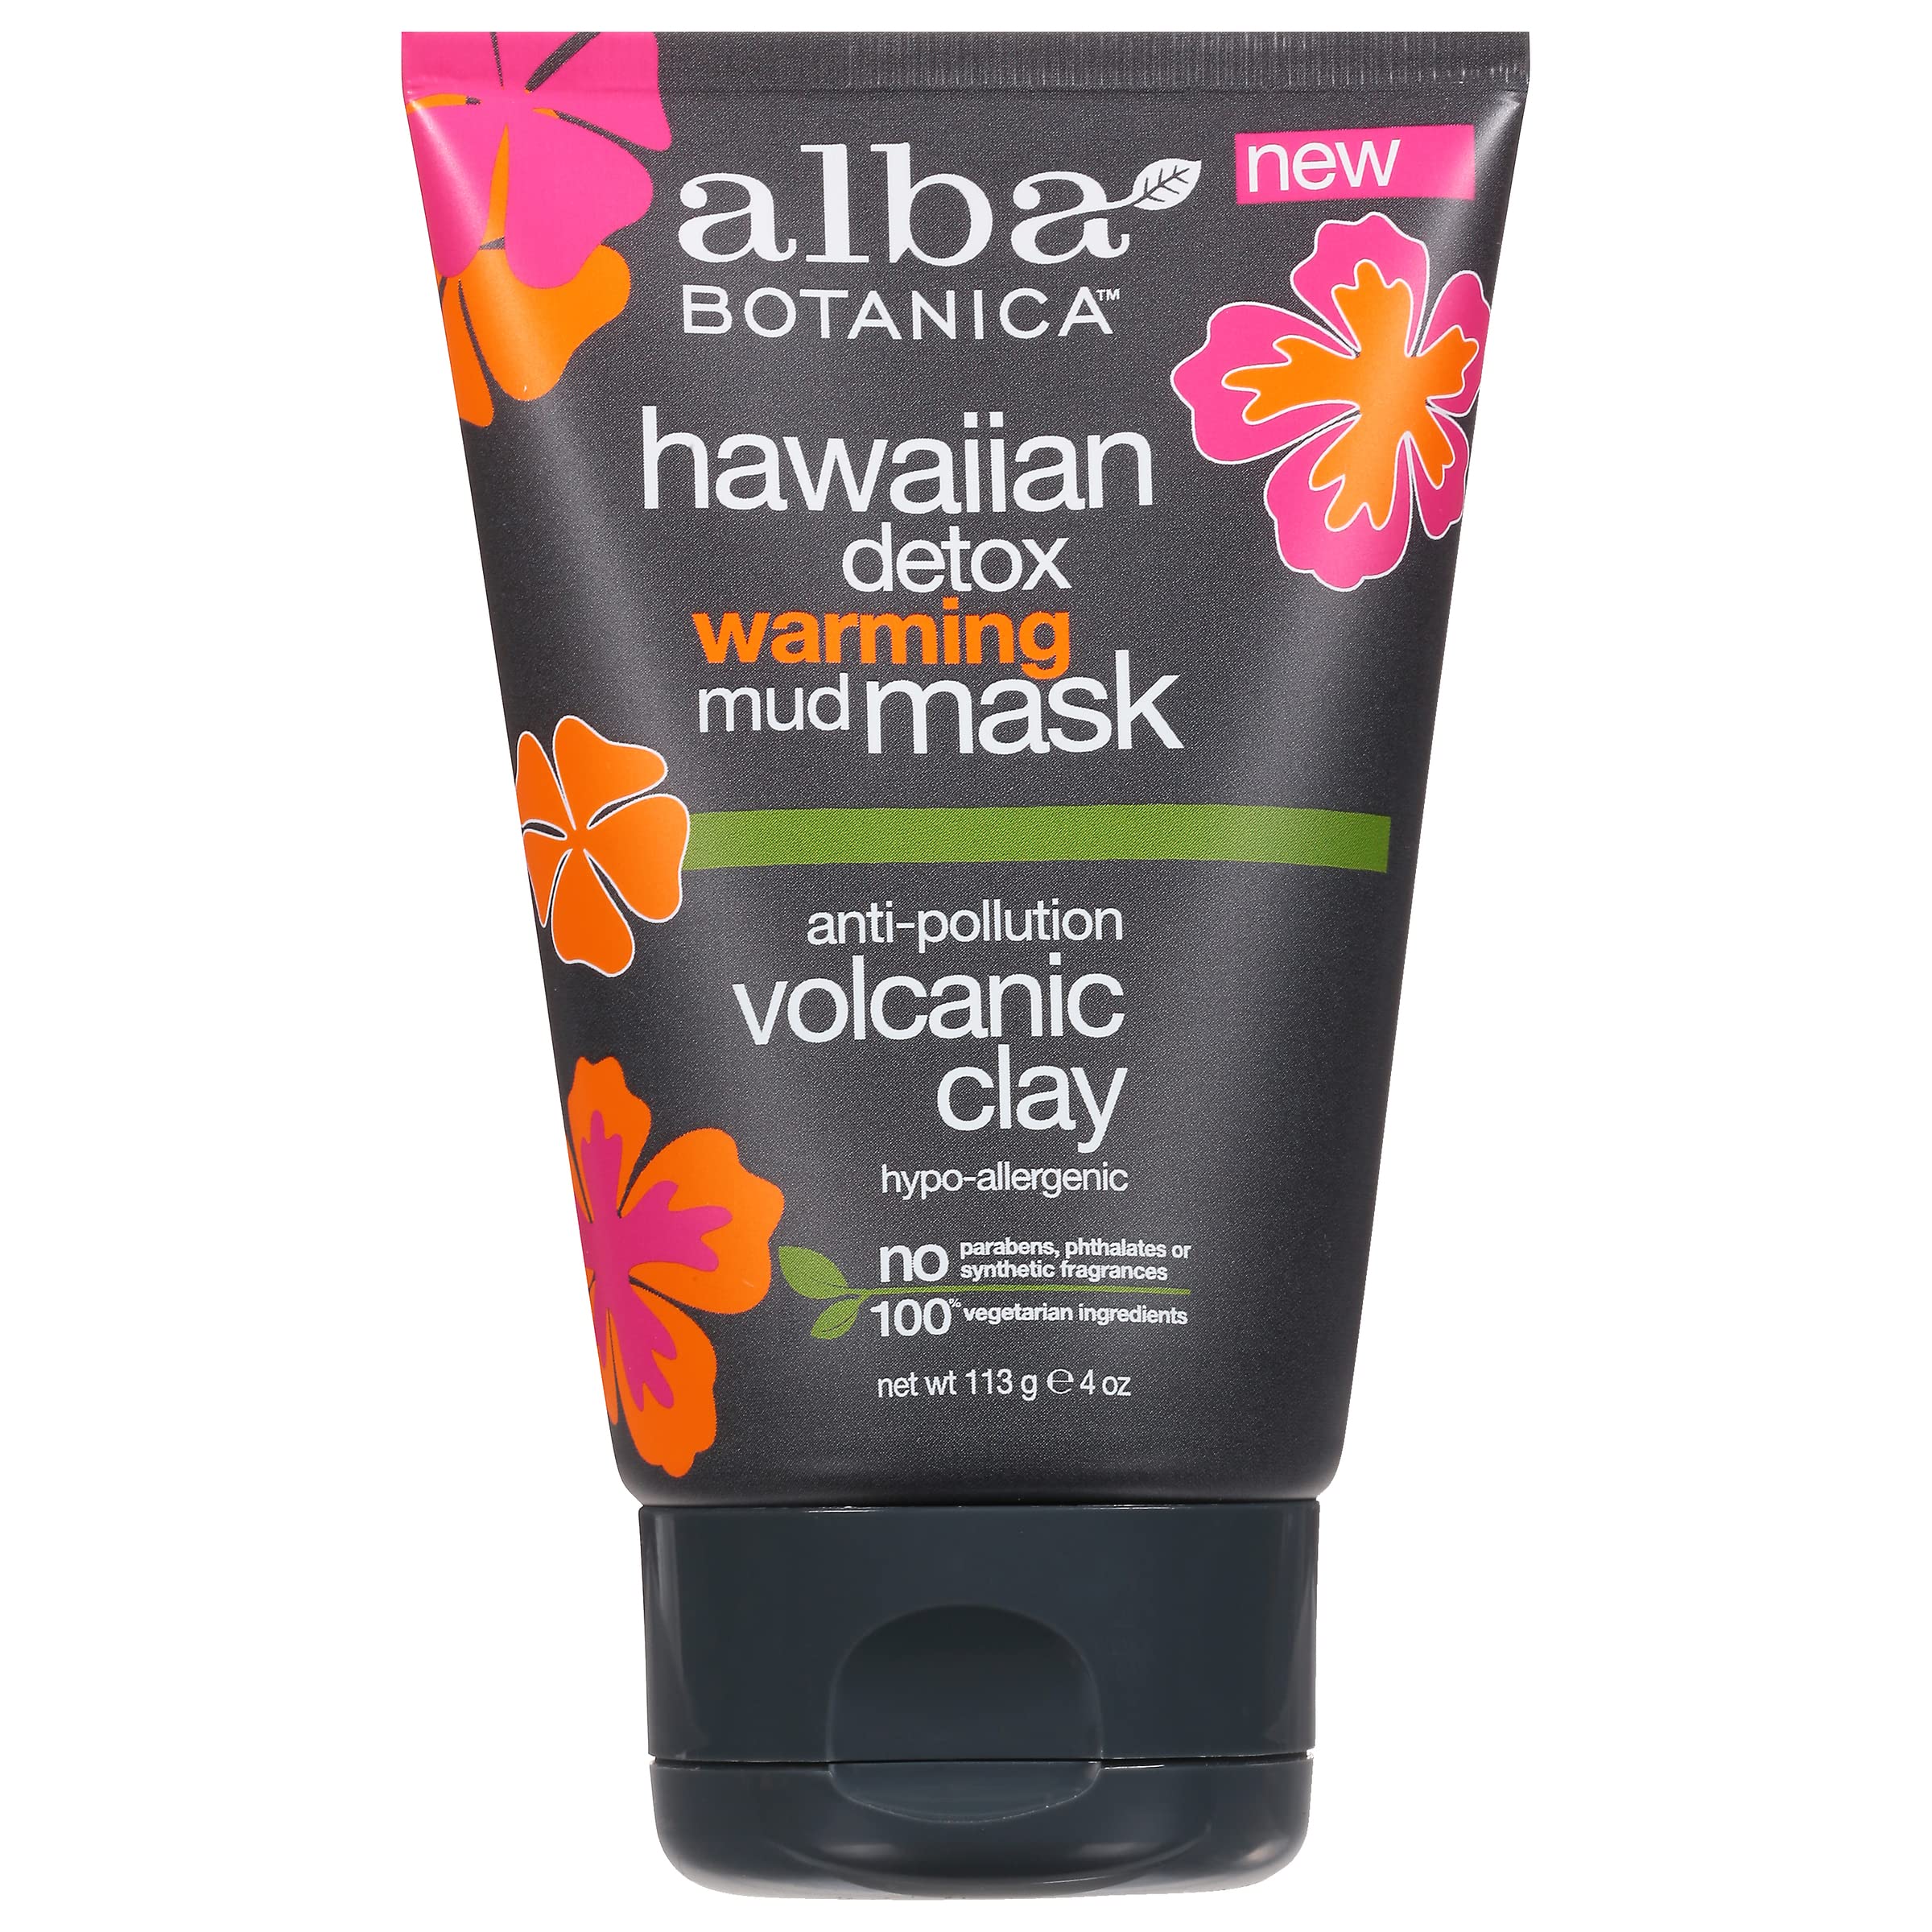 Alba Botanica Hawaiian Detox Warming Mud Mask, Anti-Pollution Volcanic Clay, 4 Oz [Subscribe & Save] $5.69